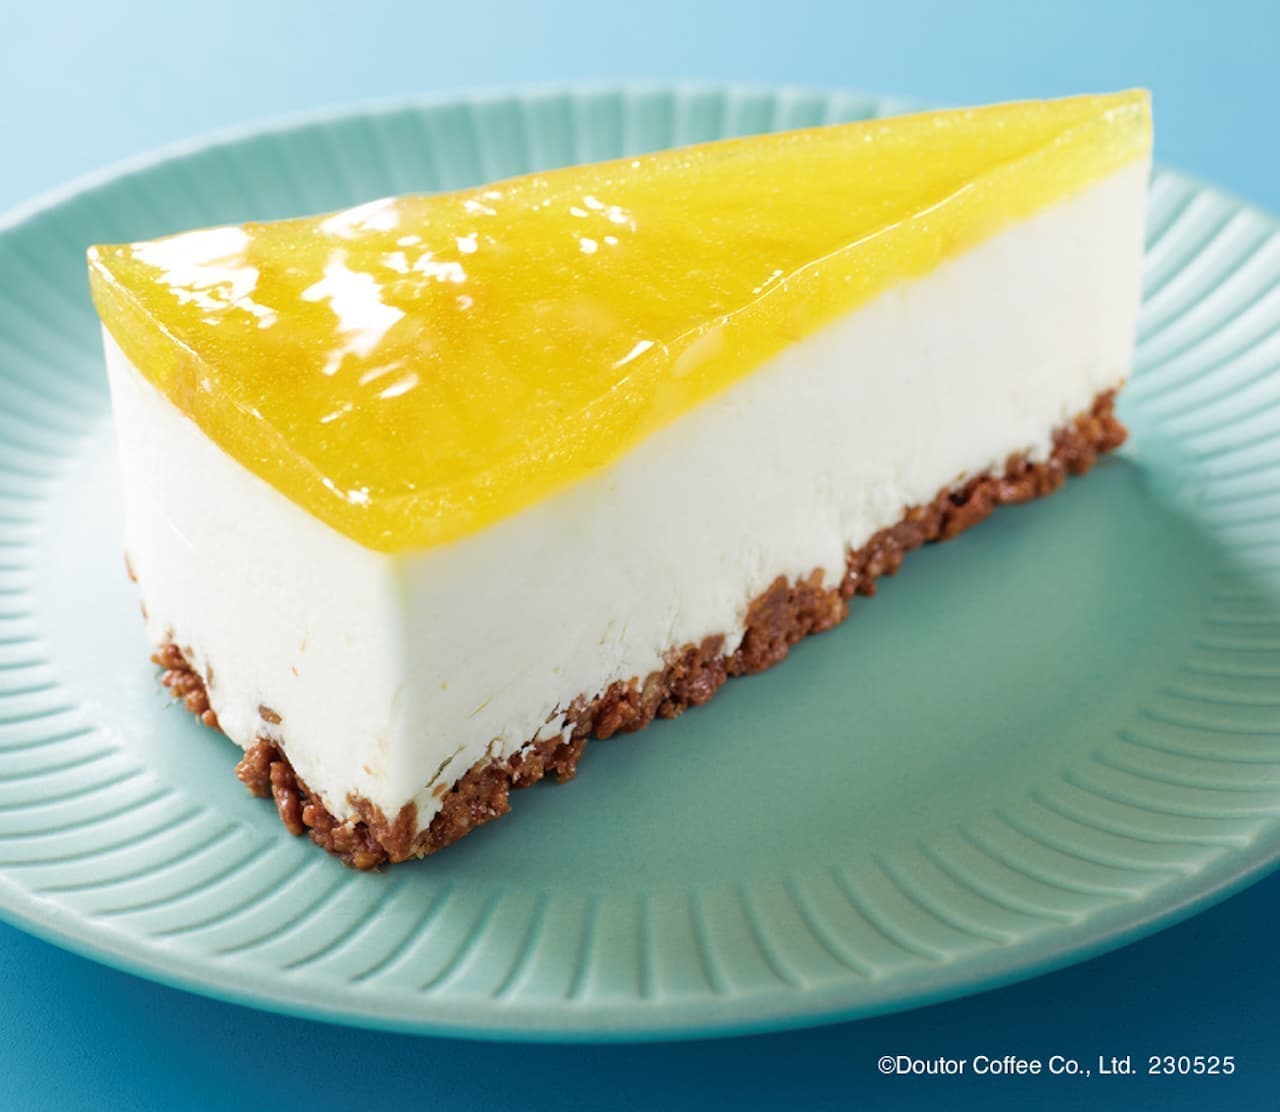 Excelsior Cafe "Rare Cheese Cake - Honey Lemon